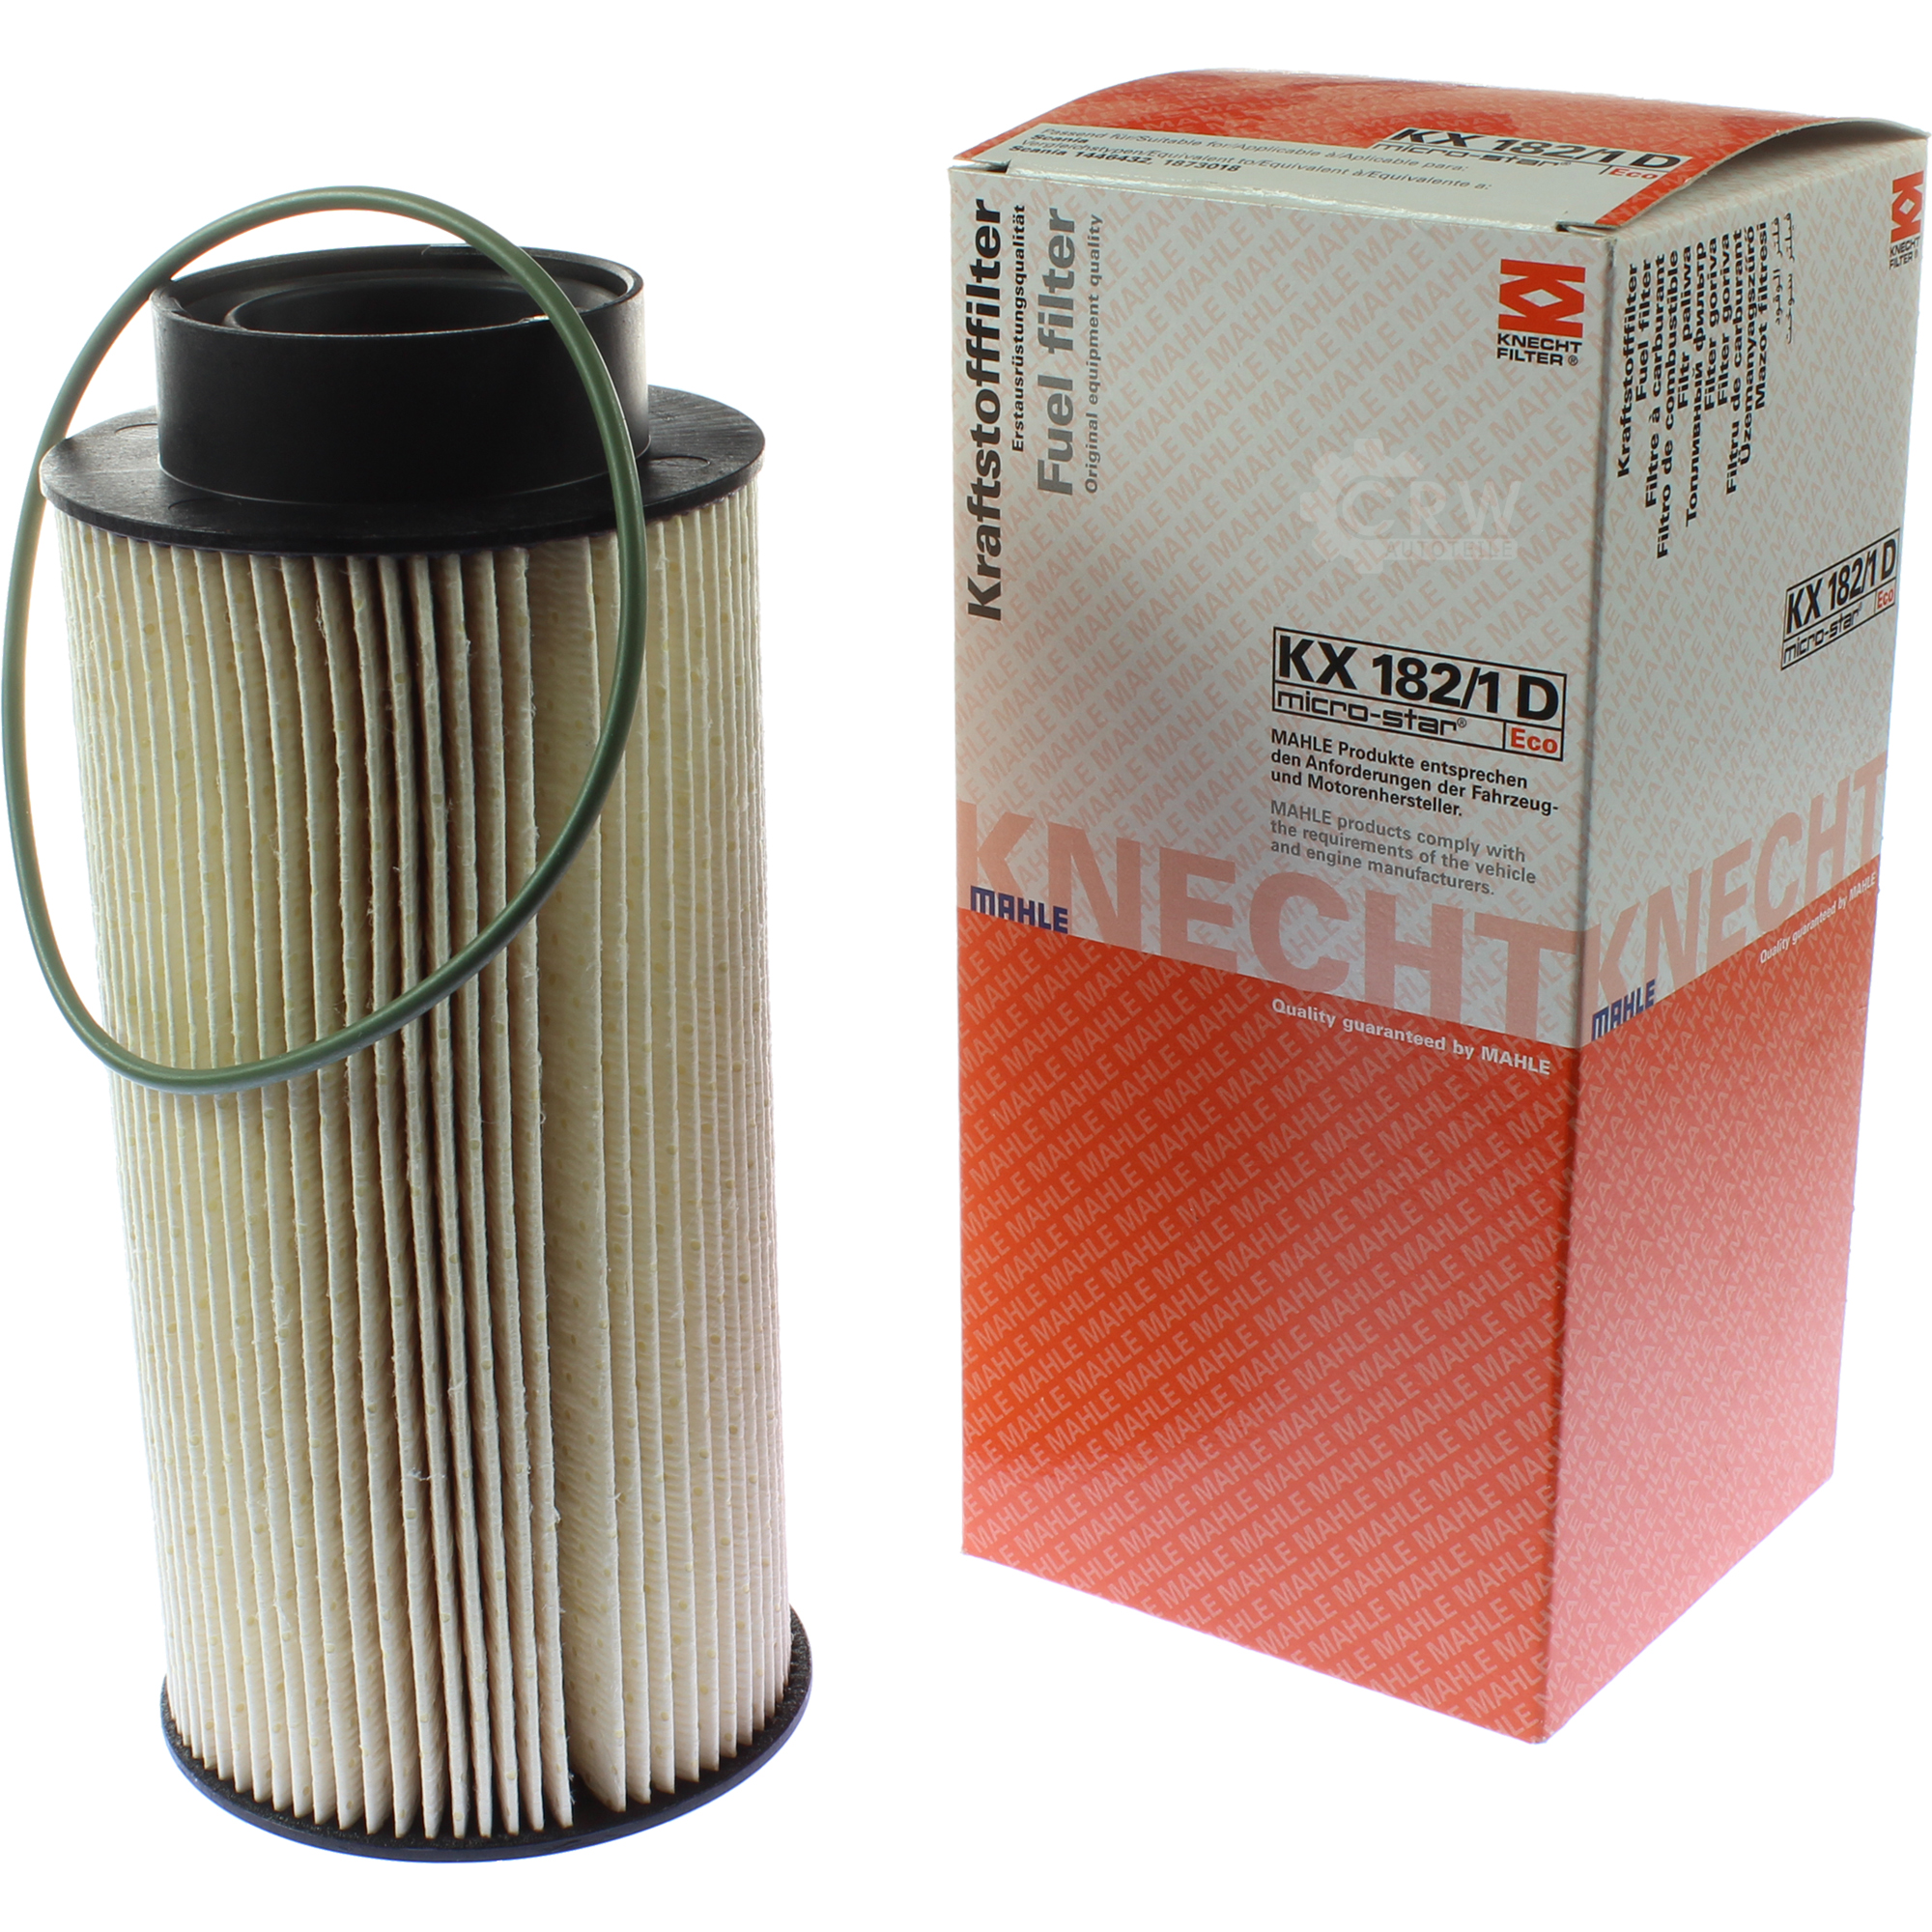 MAHLE / KNECHT KX 182/1D Kraftstofffilter Filter Fuel